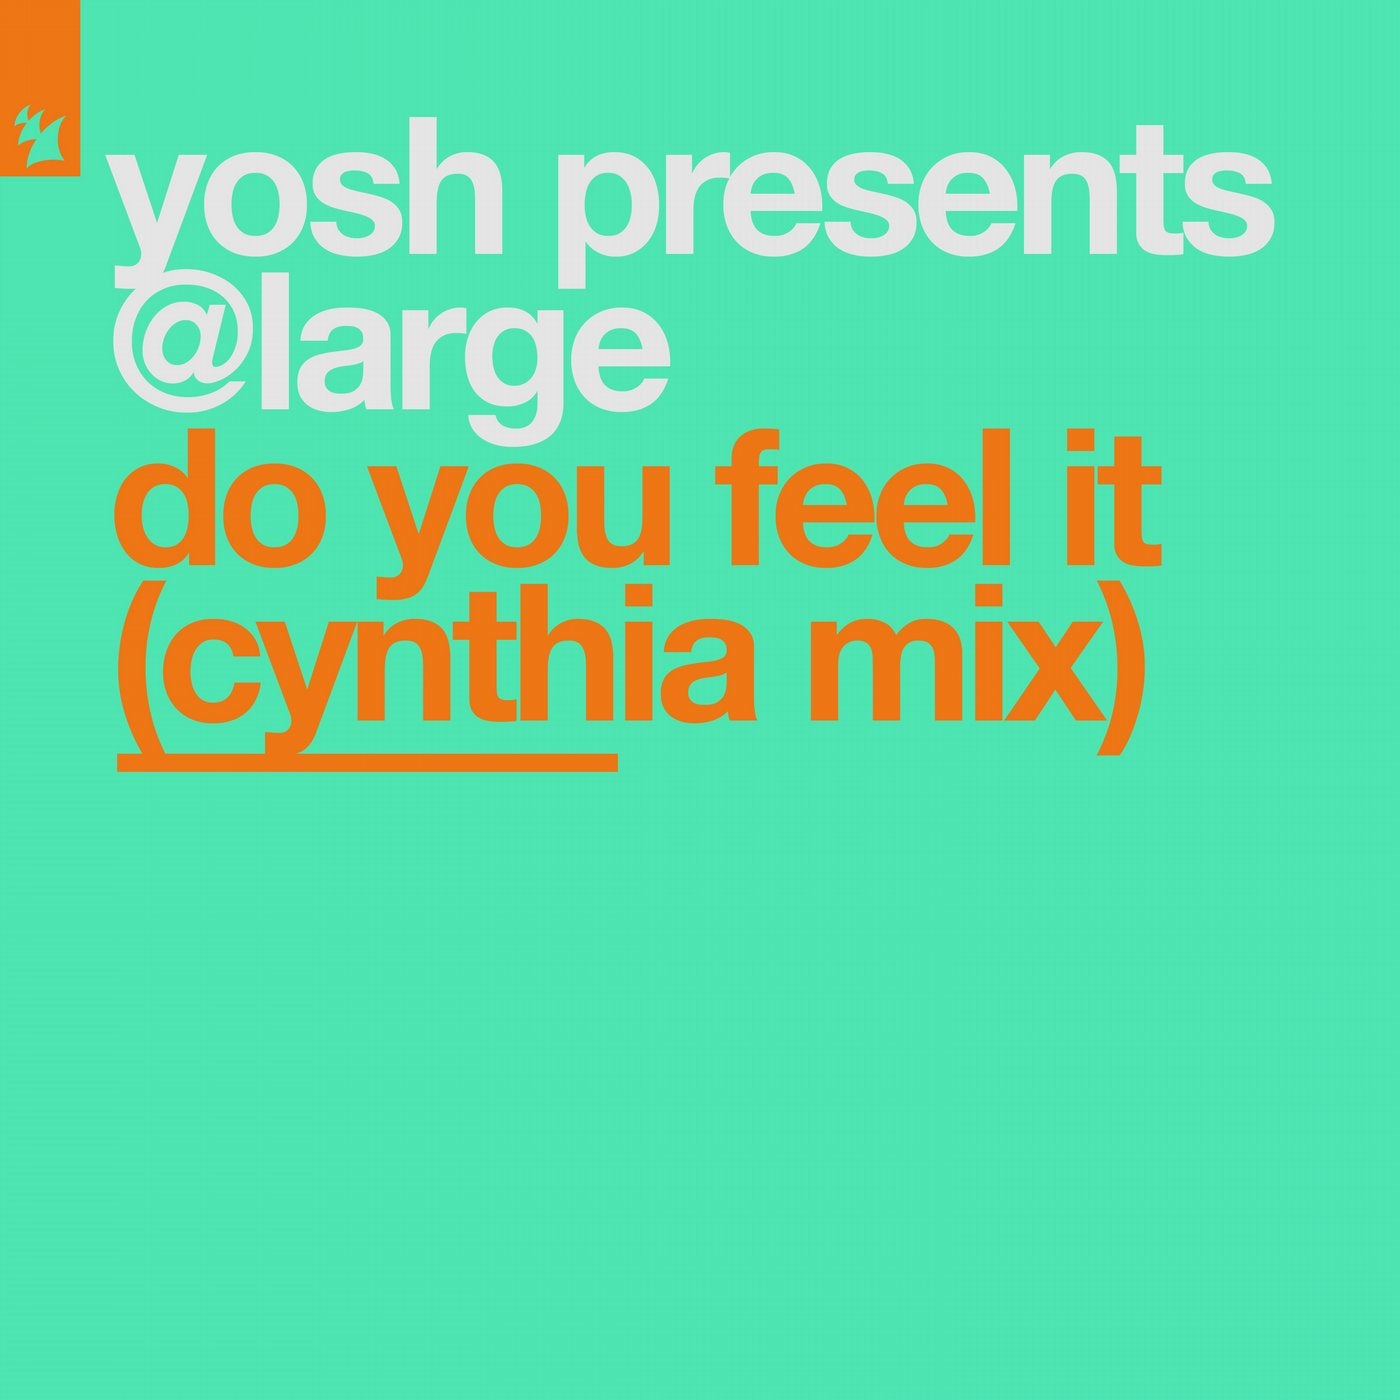 Do You Feel It - Cynthia Mix